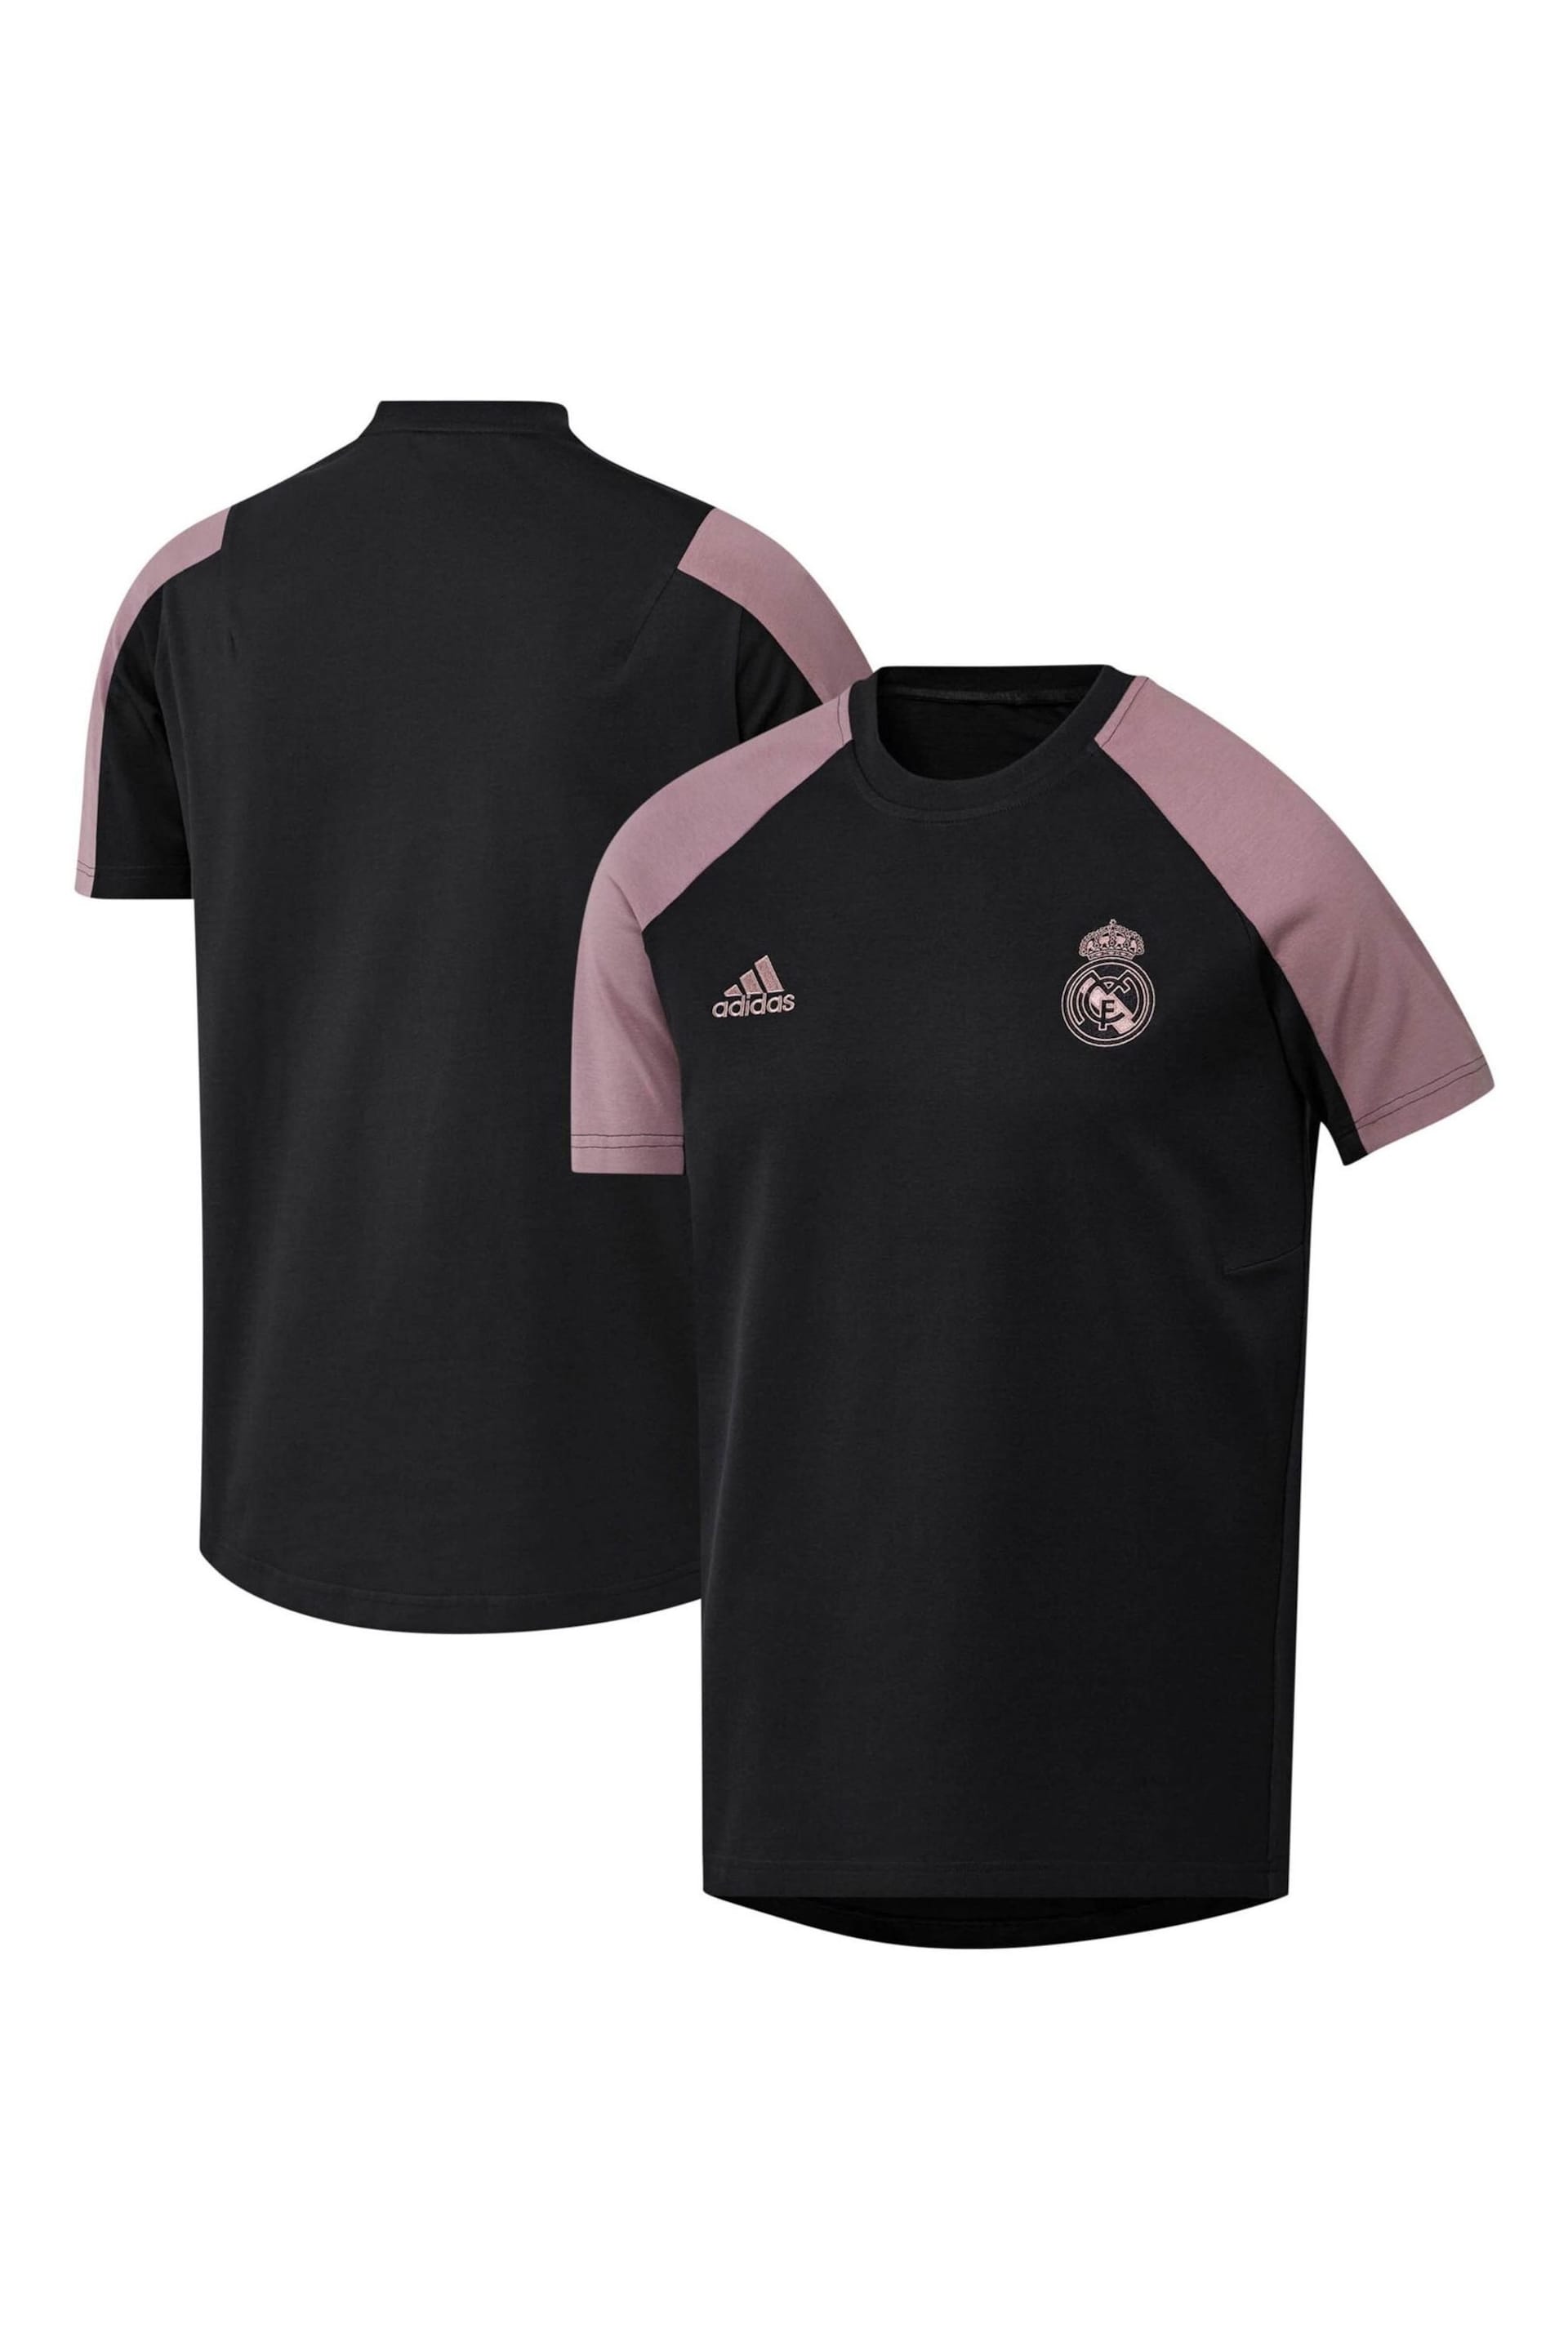 adidas Black Real Madrid Travel T-Shirt - Image 1 of 3